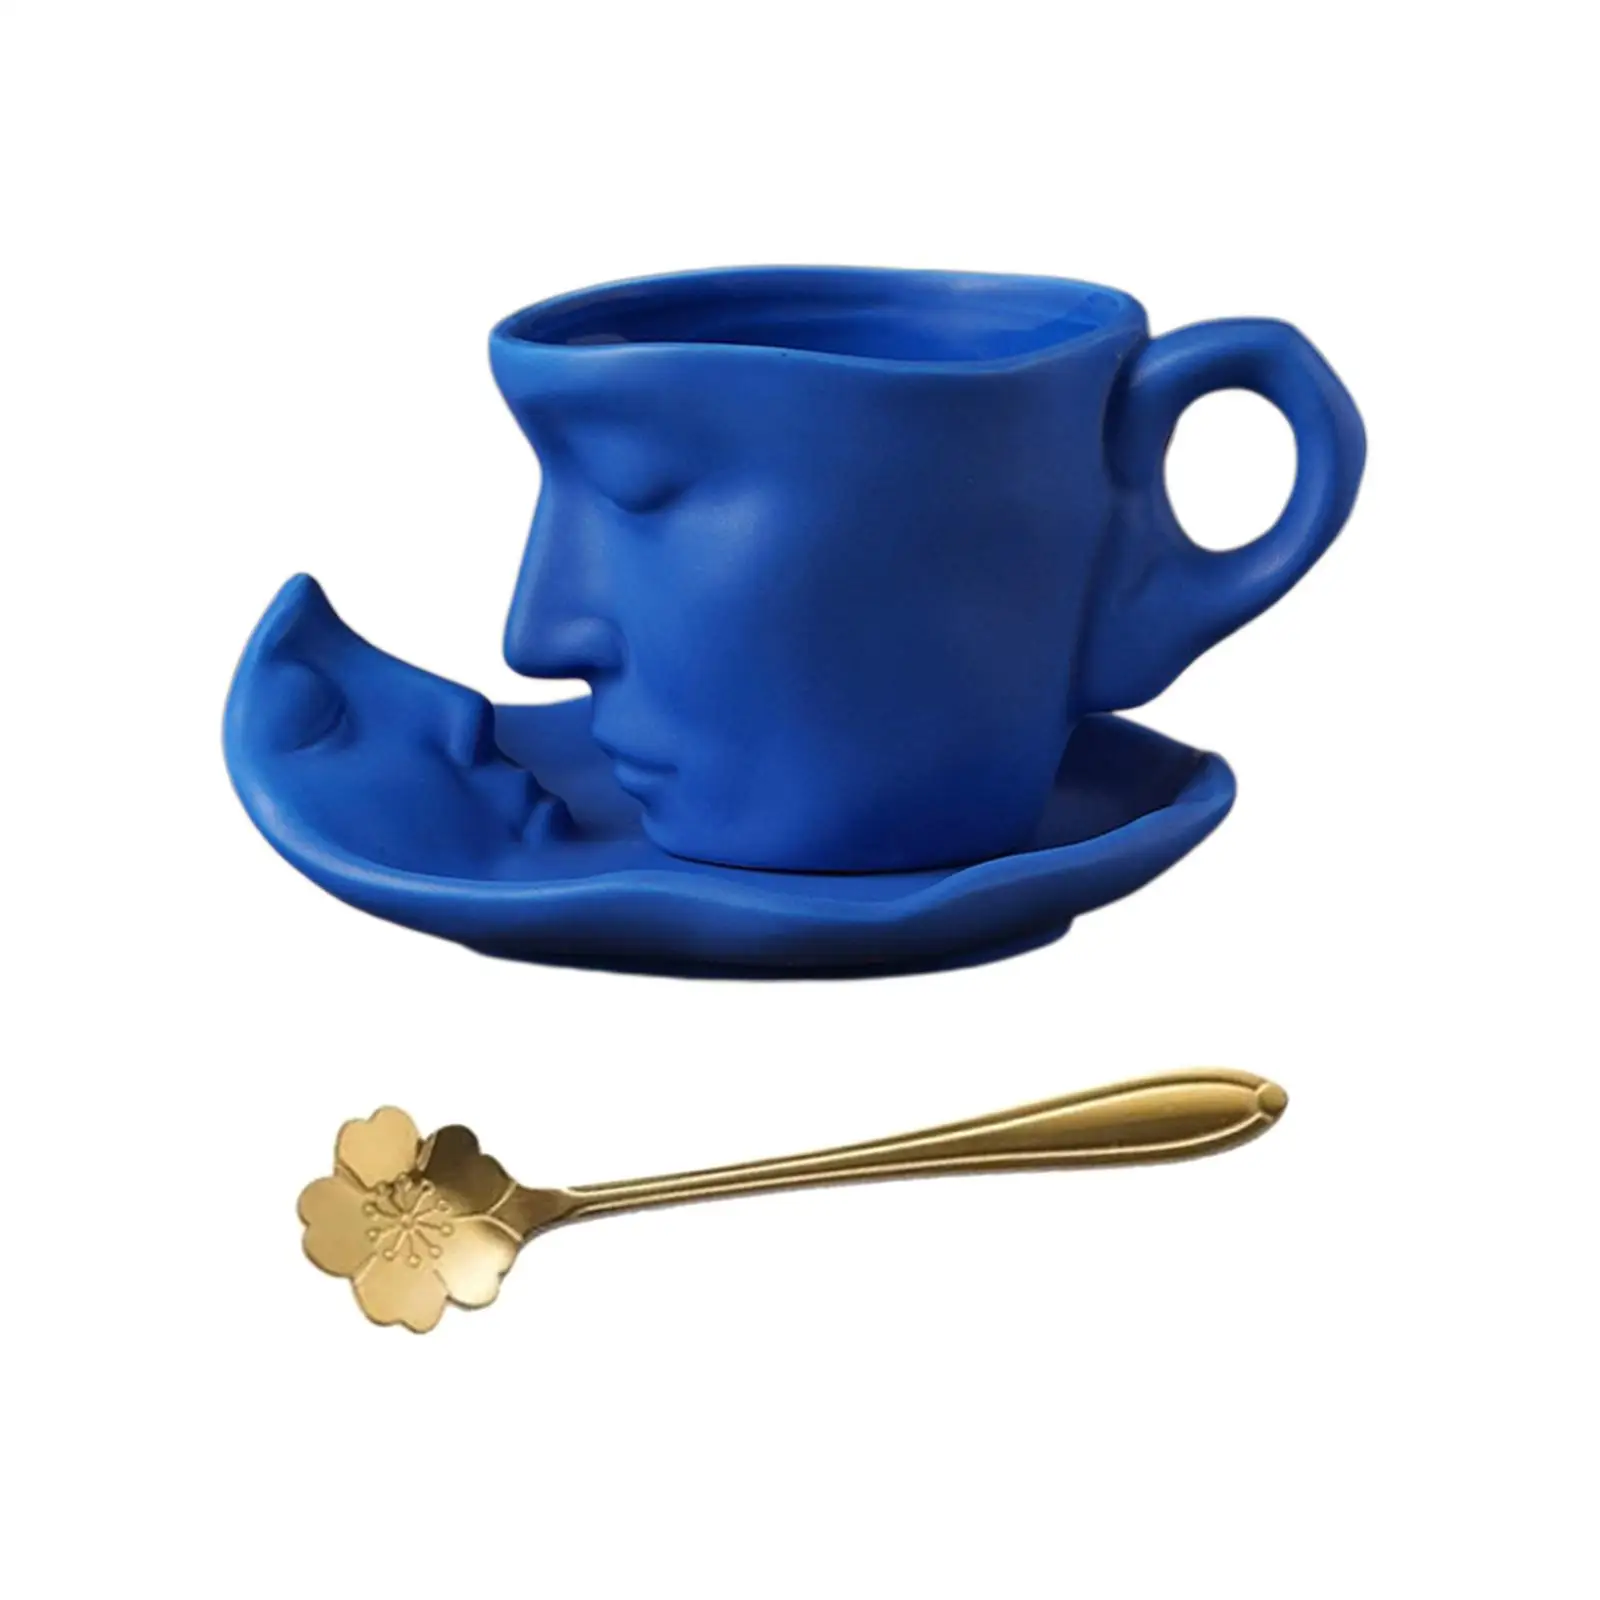 3D Human Face Kissing Mug Espresso Mugs Table Arts for Party Creative Gift